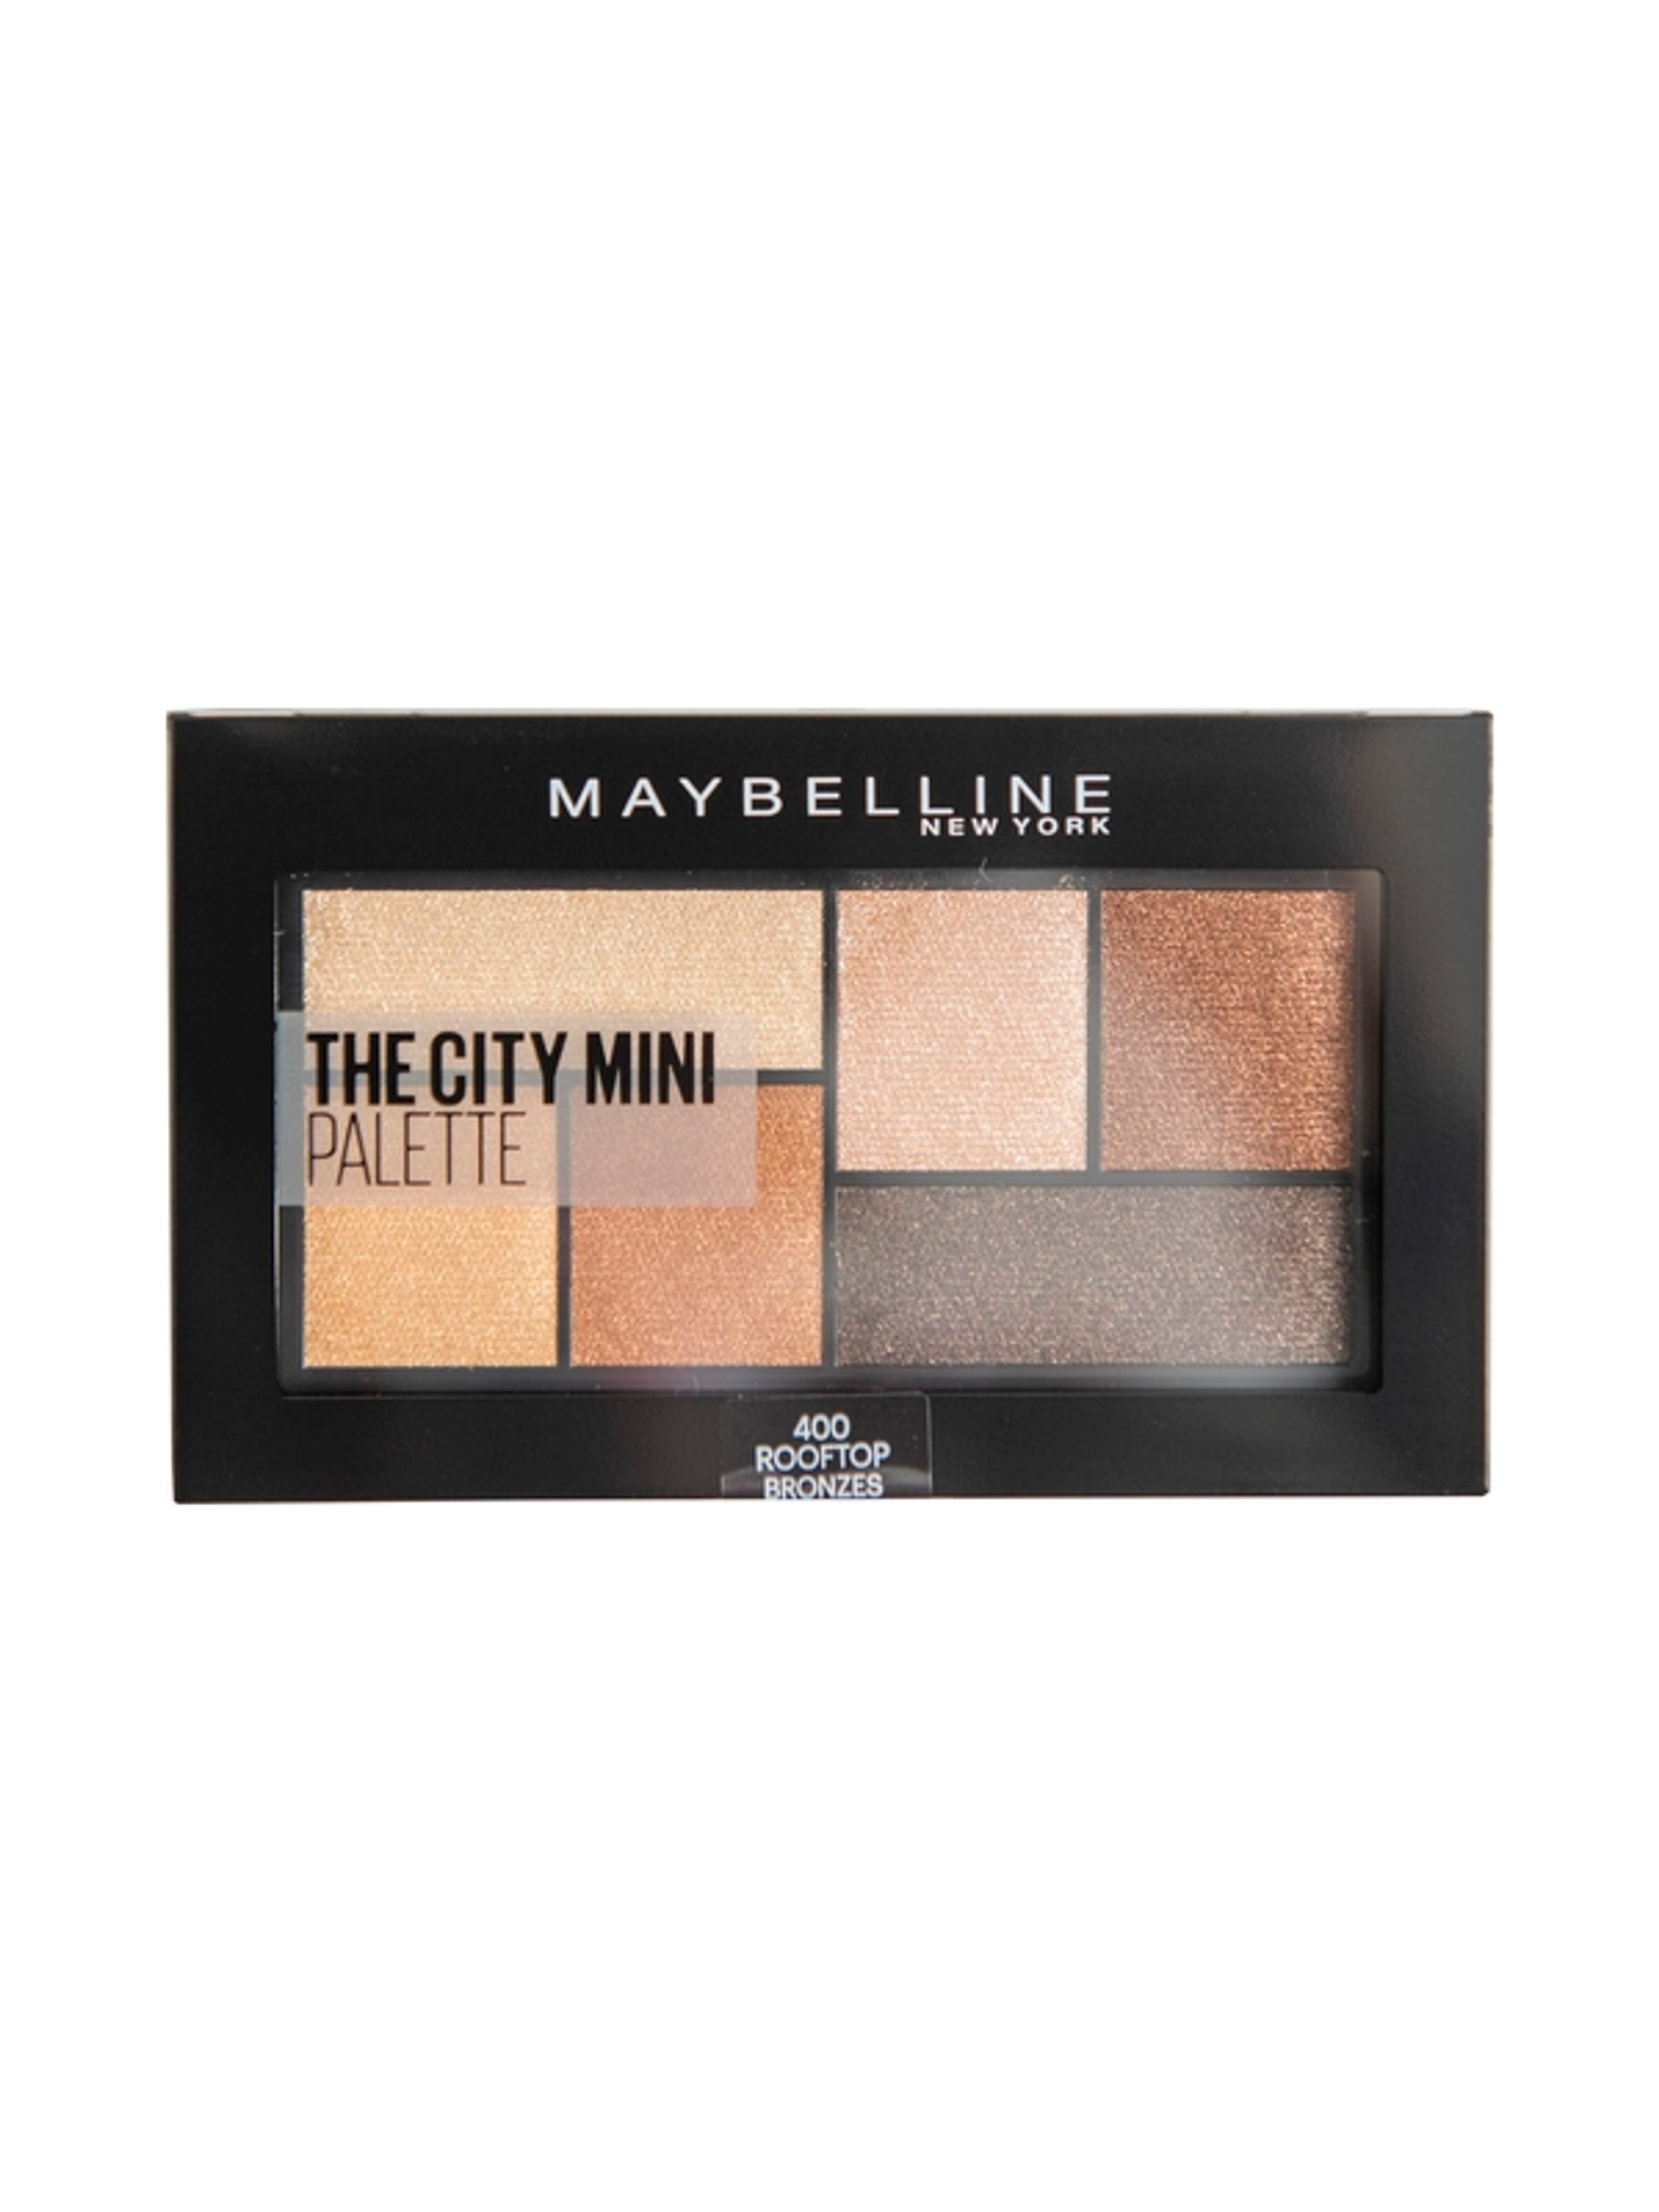 Maybelline The City Mini szemhéjpúder paletta, 400 Rooftop Bronzers - 1 db